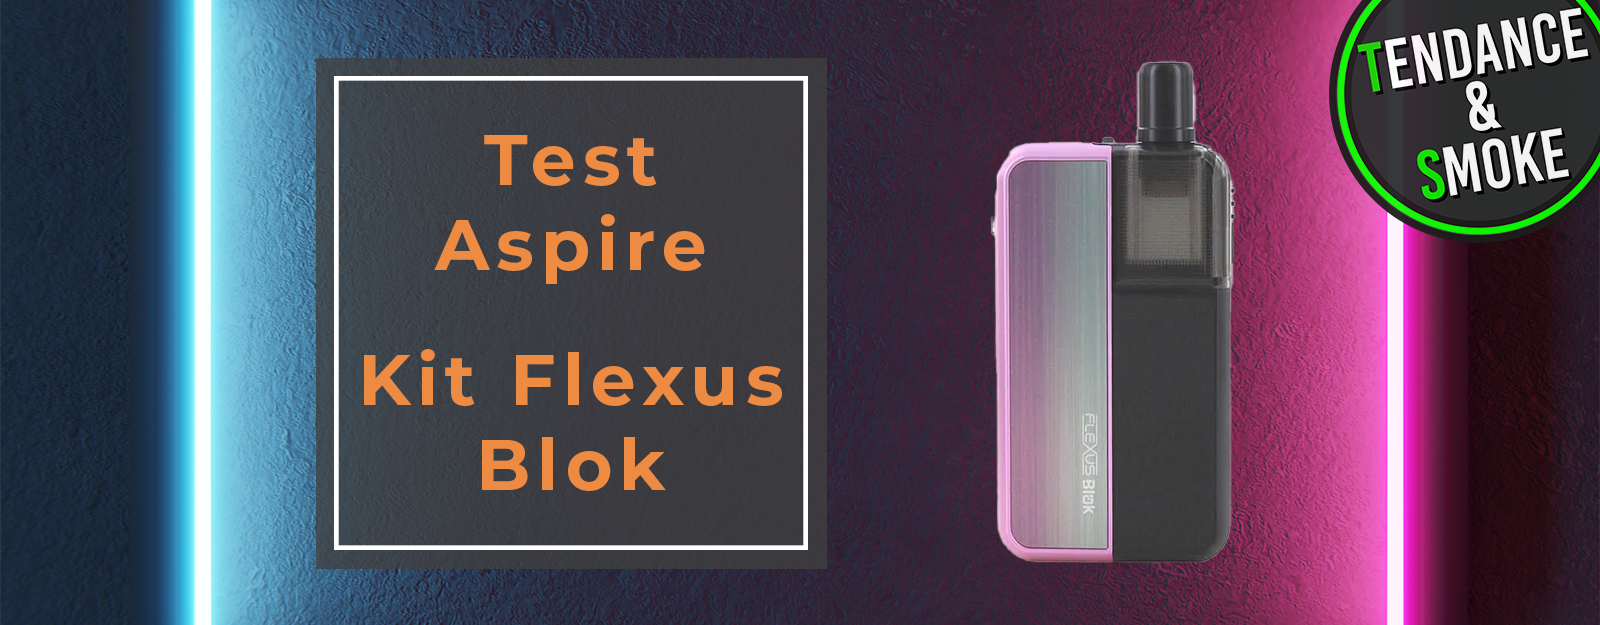 Kit Flexus Blok - Aspire